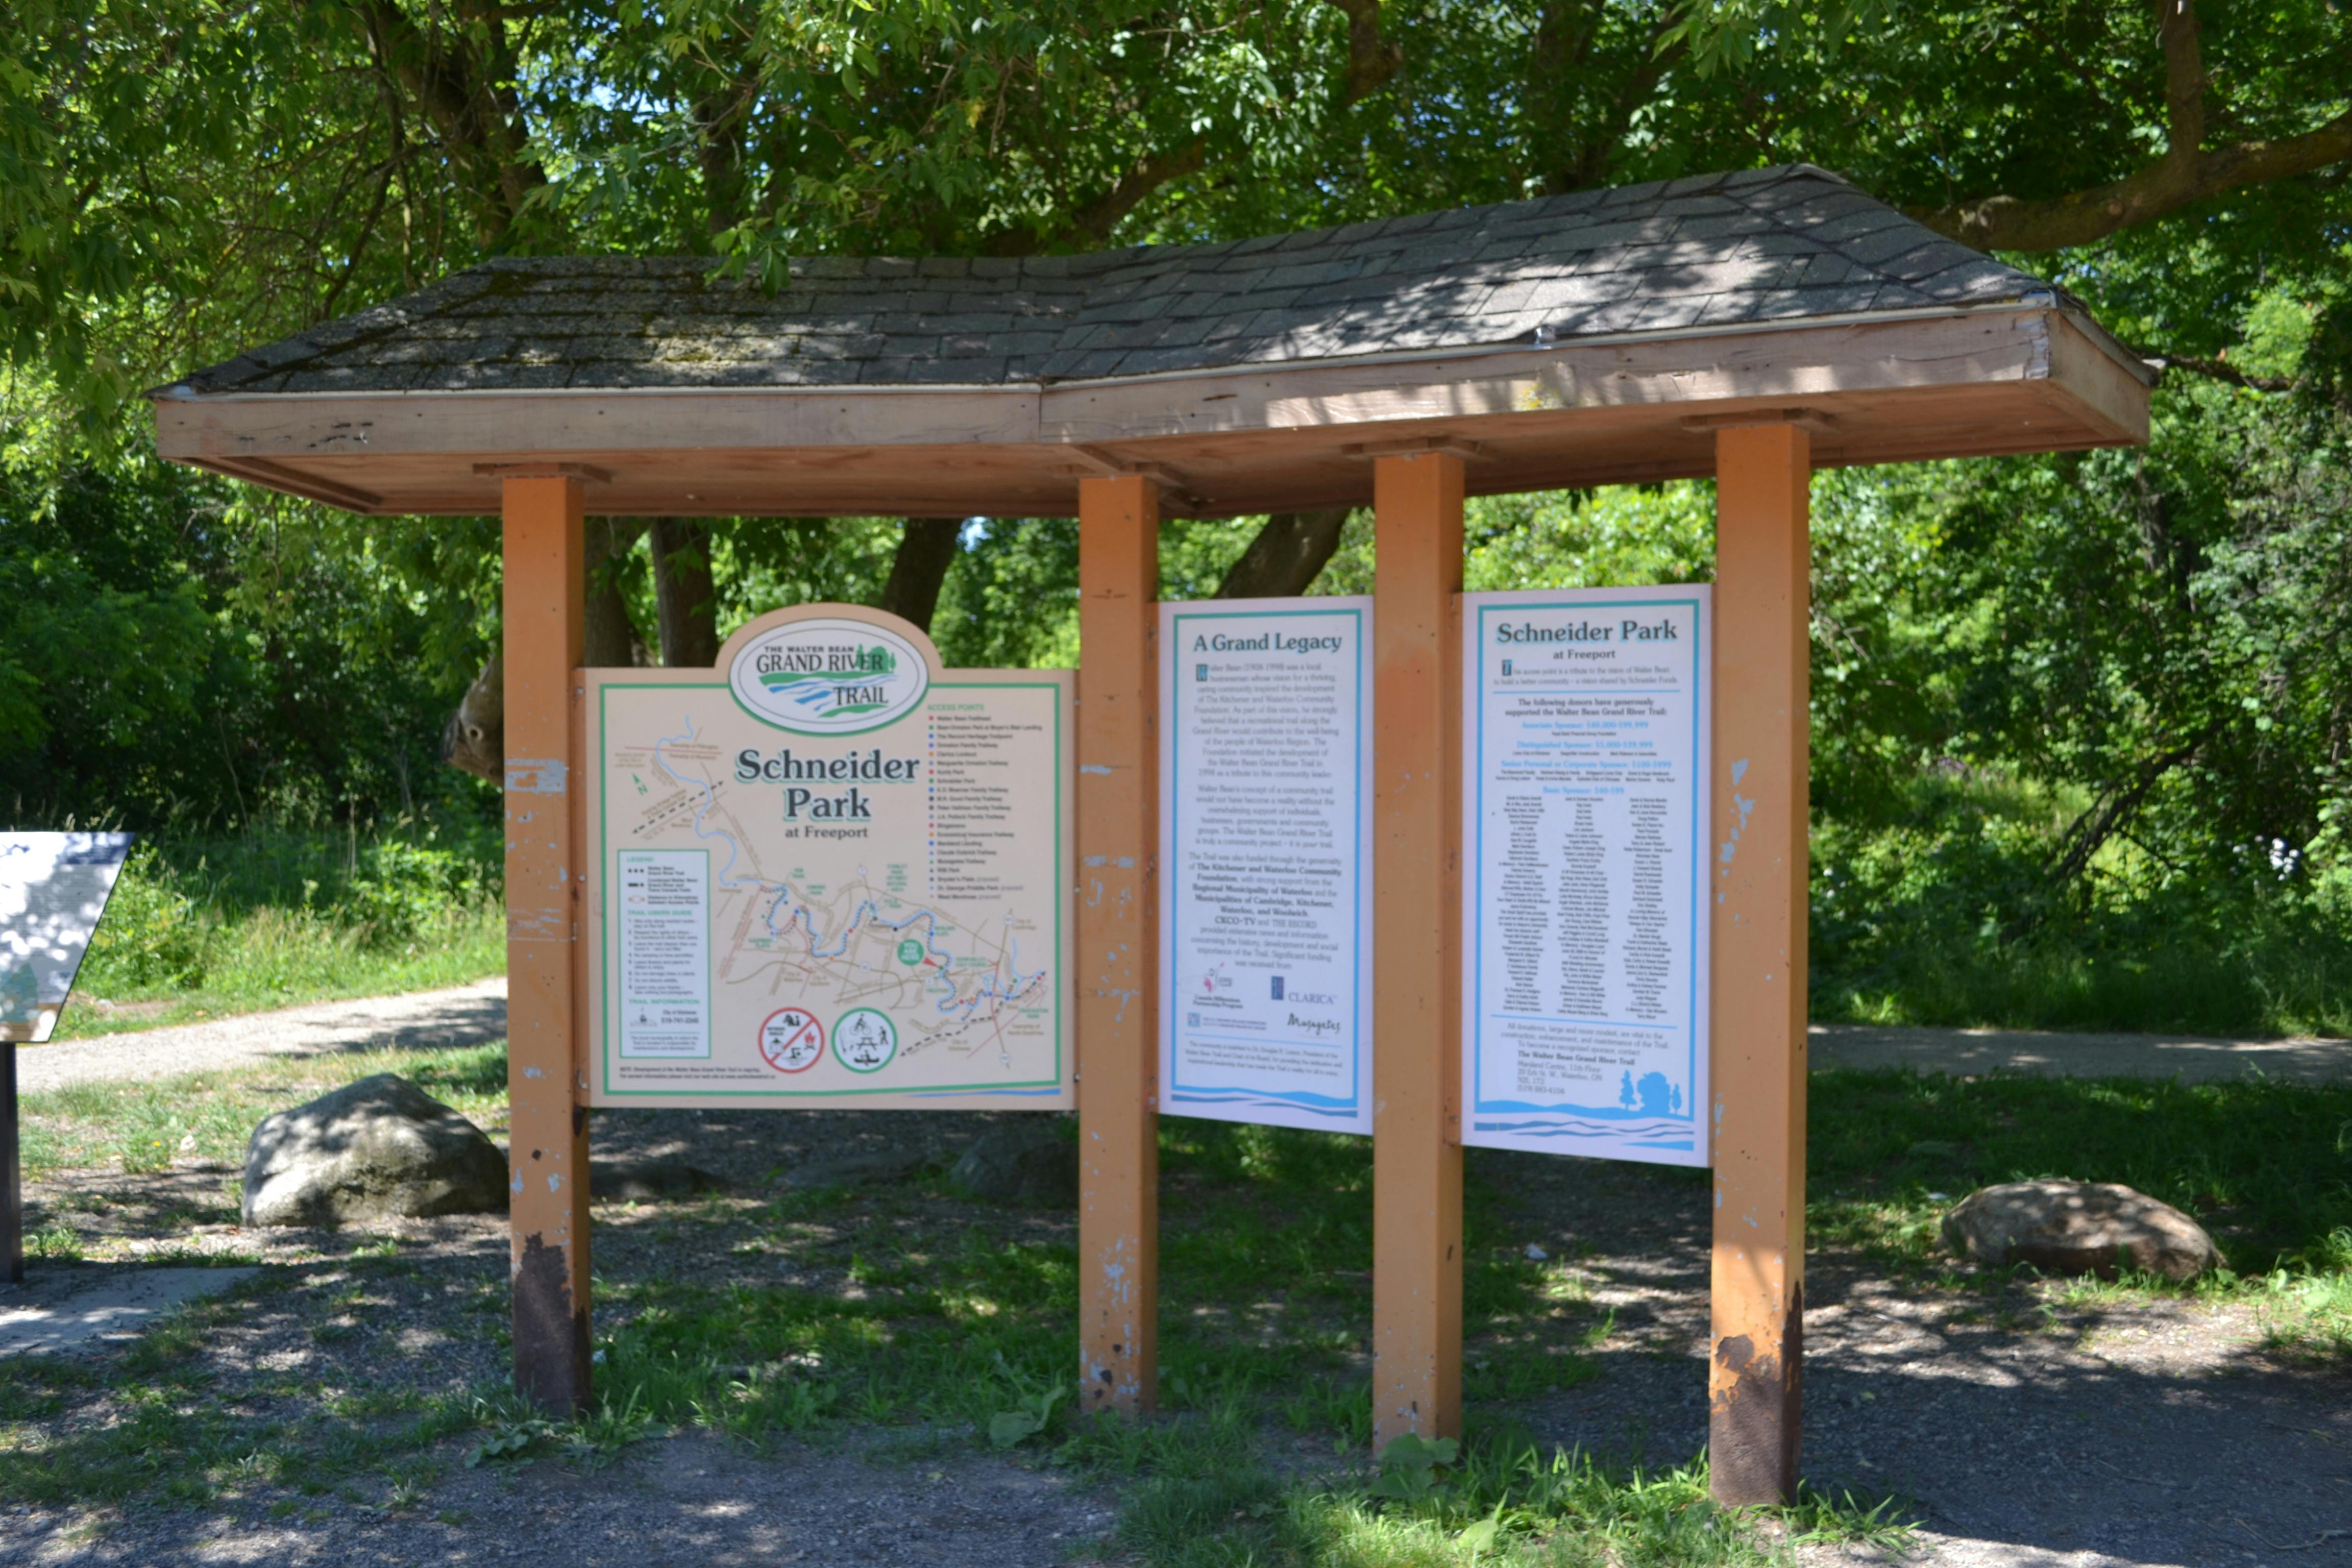 Signage in the adjacent Schneider Park